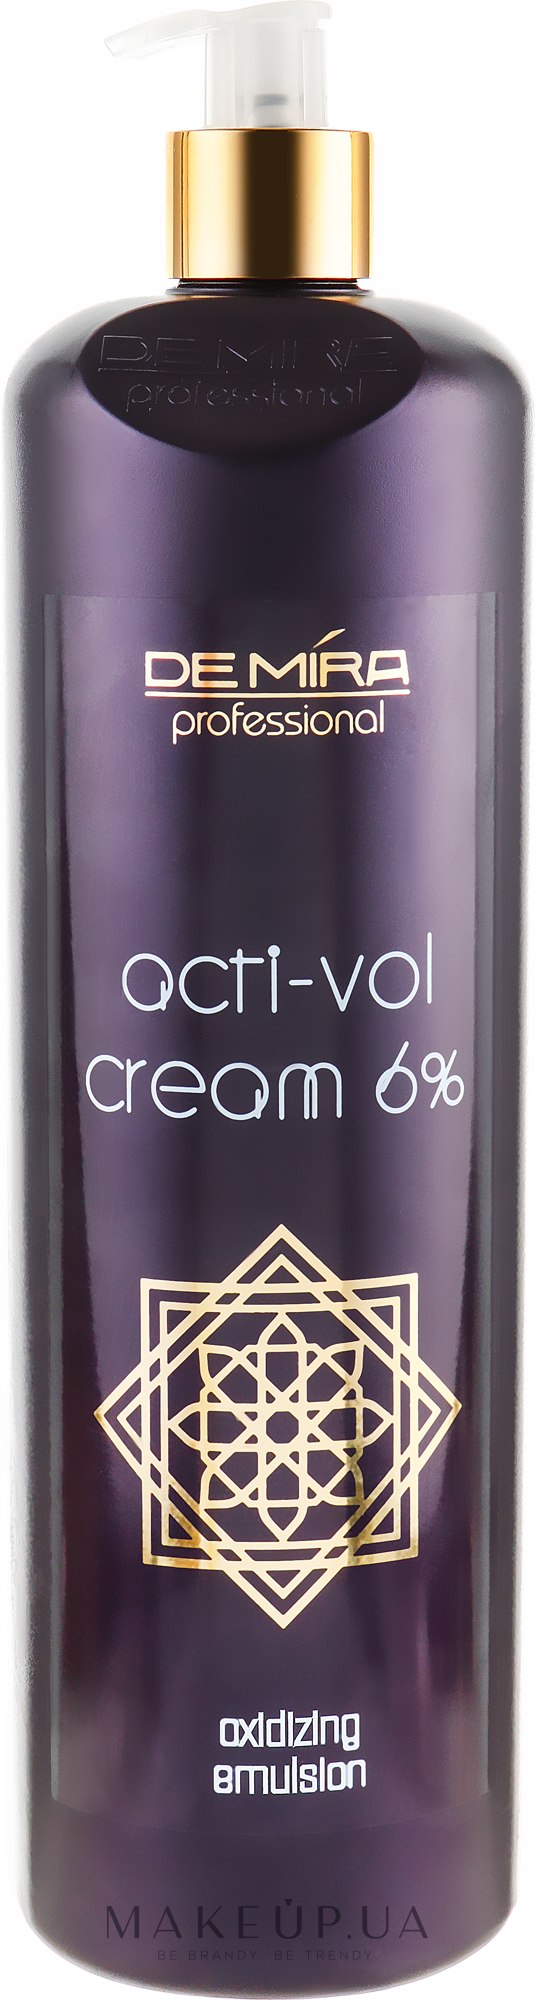 Окислювальна емульсія 6 % - Demira Professional Acti-Vol Cream — фото 1000ml